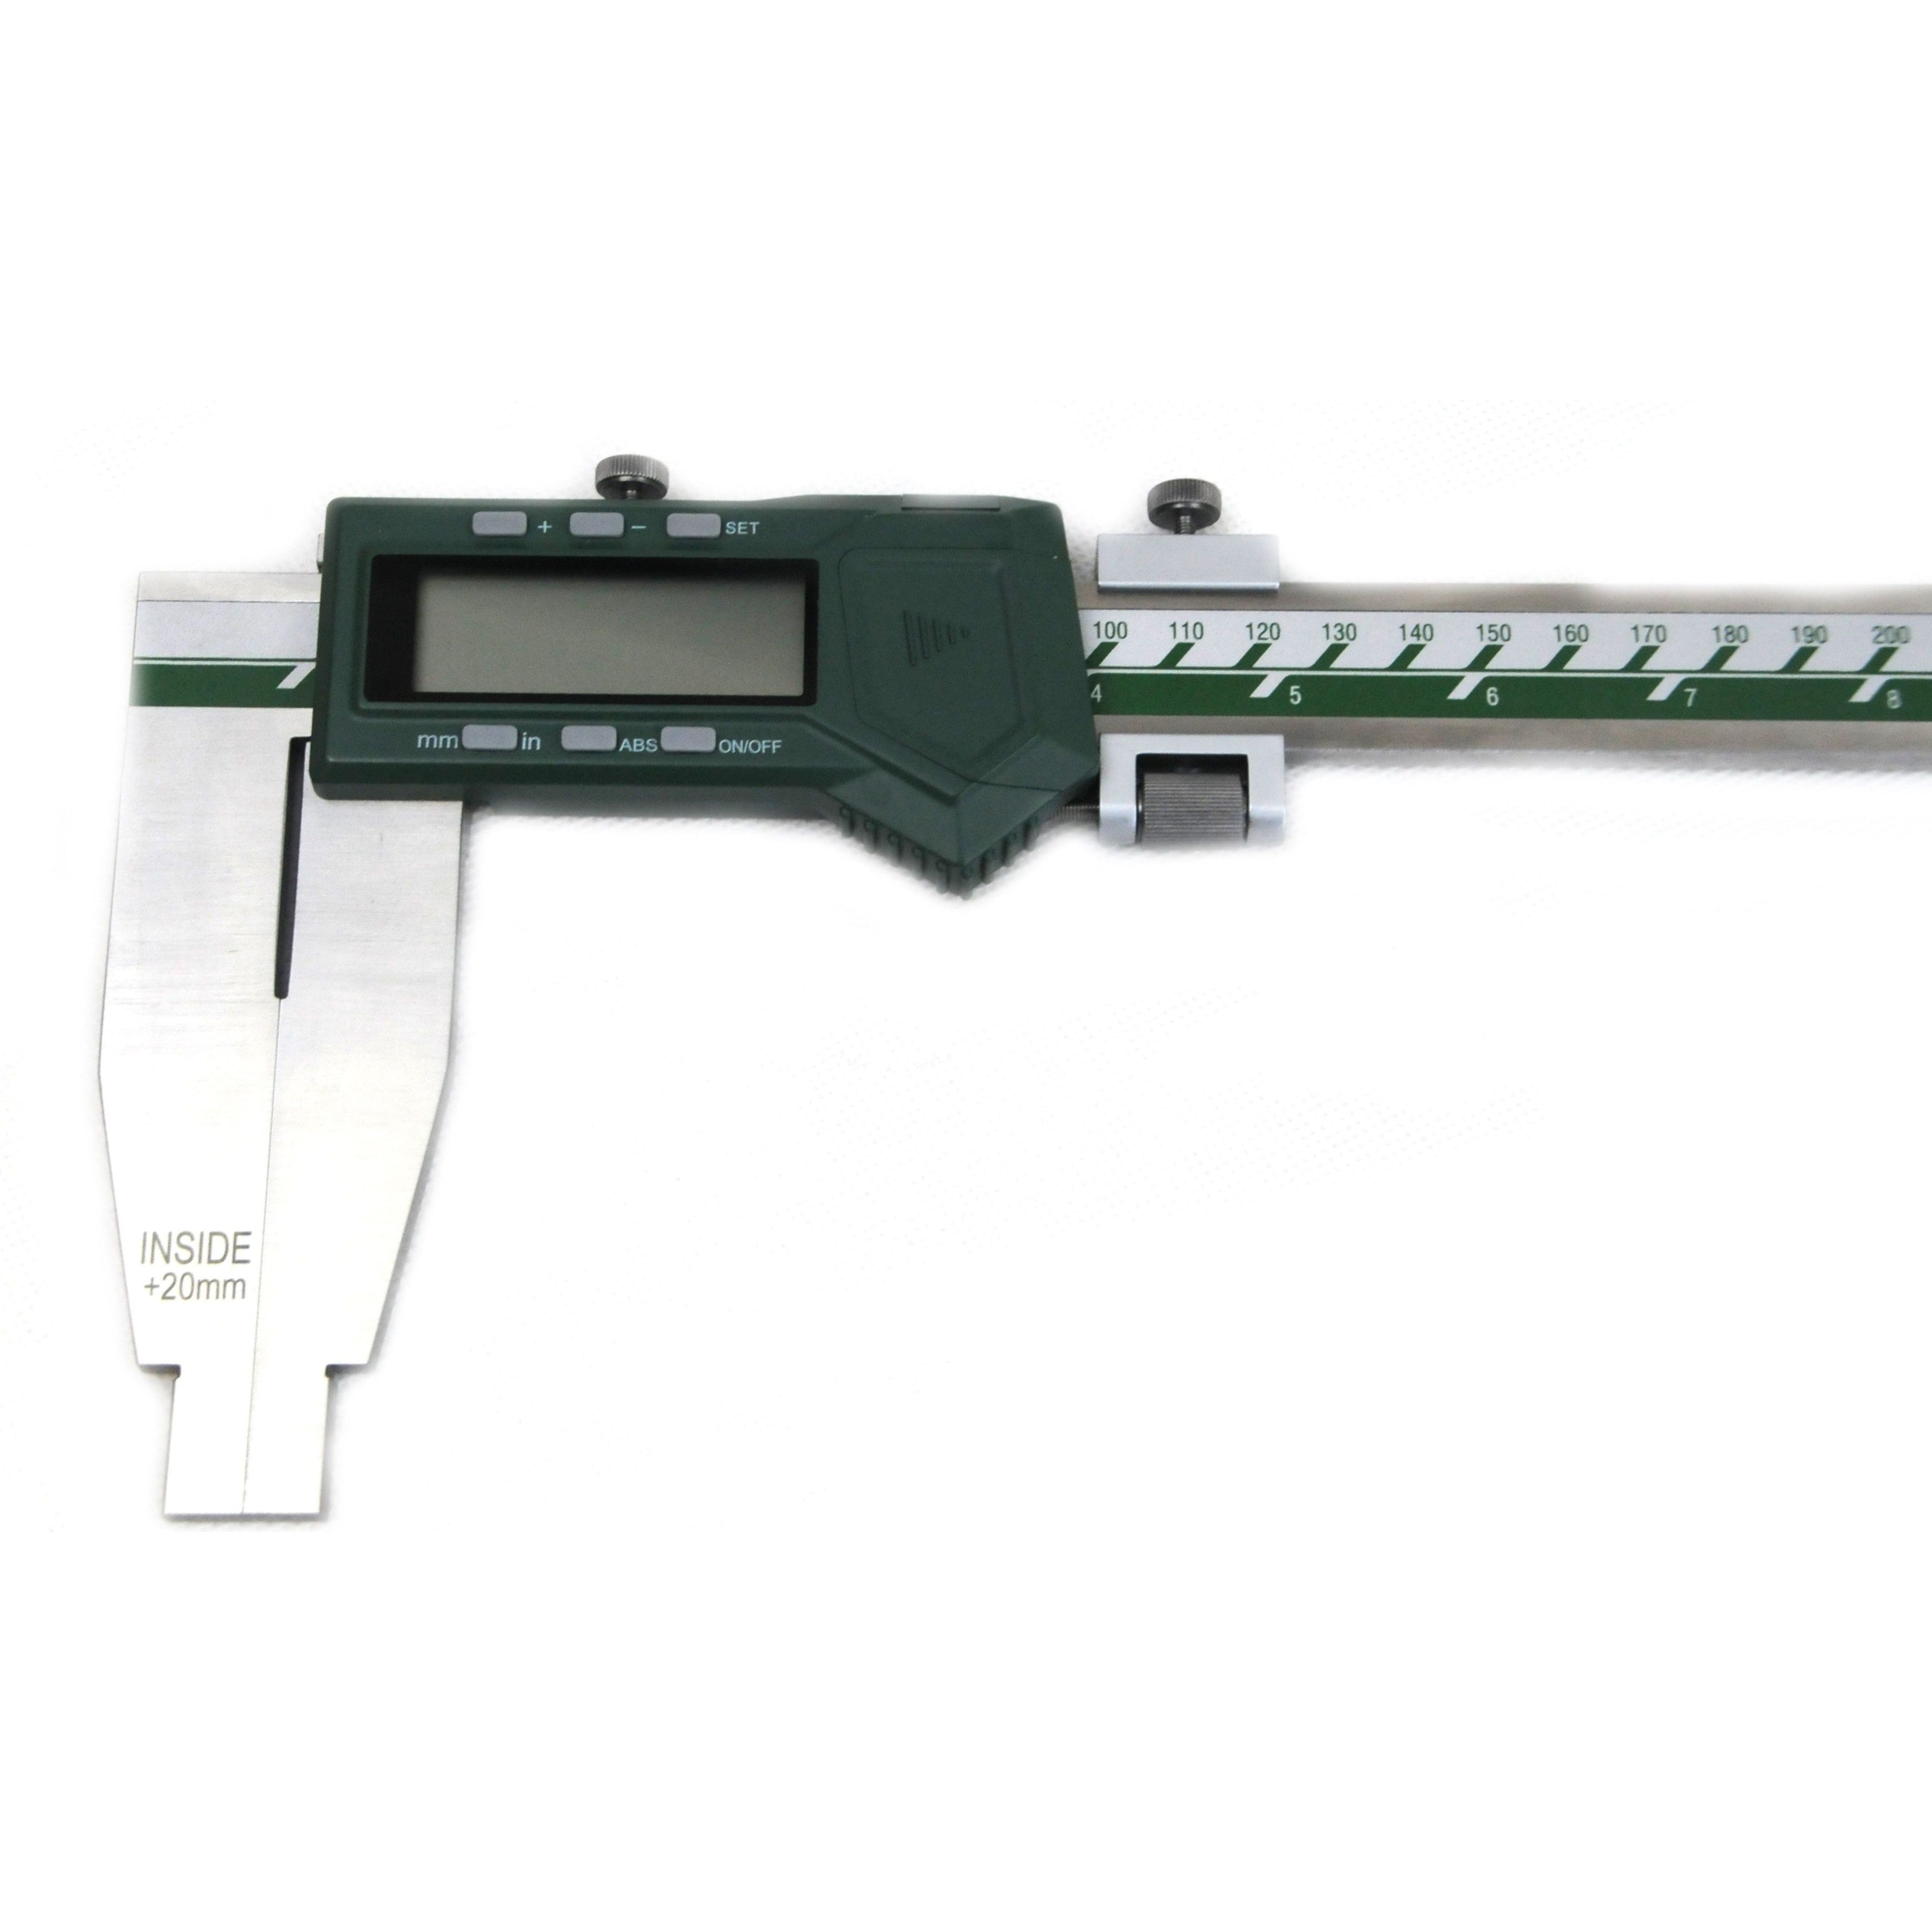 Insize Long Jaw Digital Caliper 0-600mm / 0-24" Range Series 1106-601